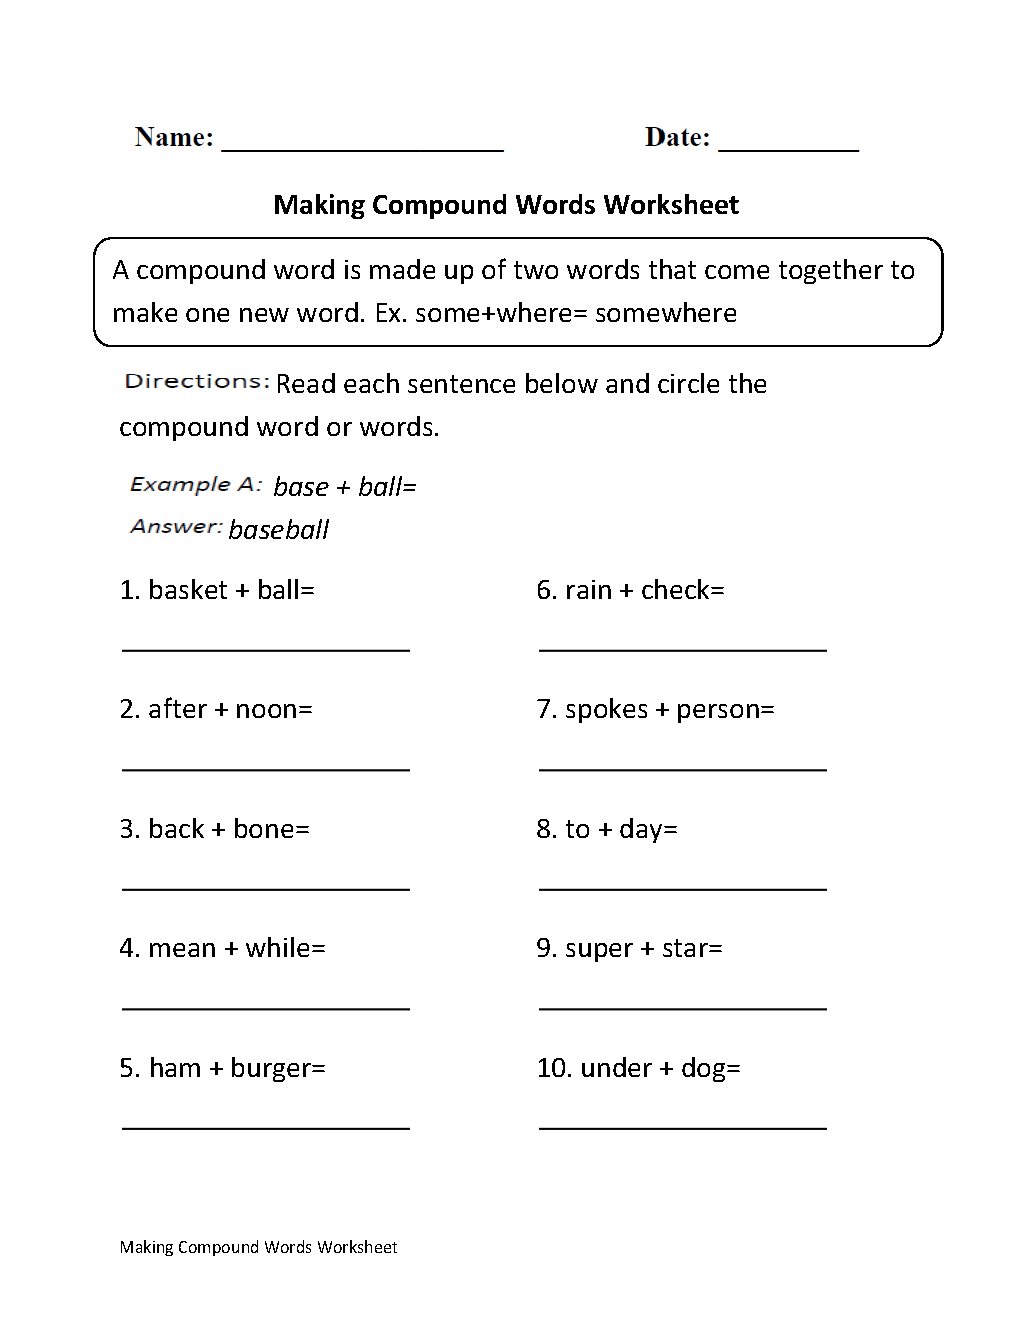 Making Compound Words Worksheet